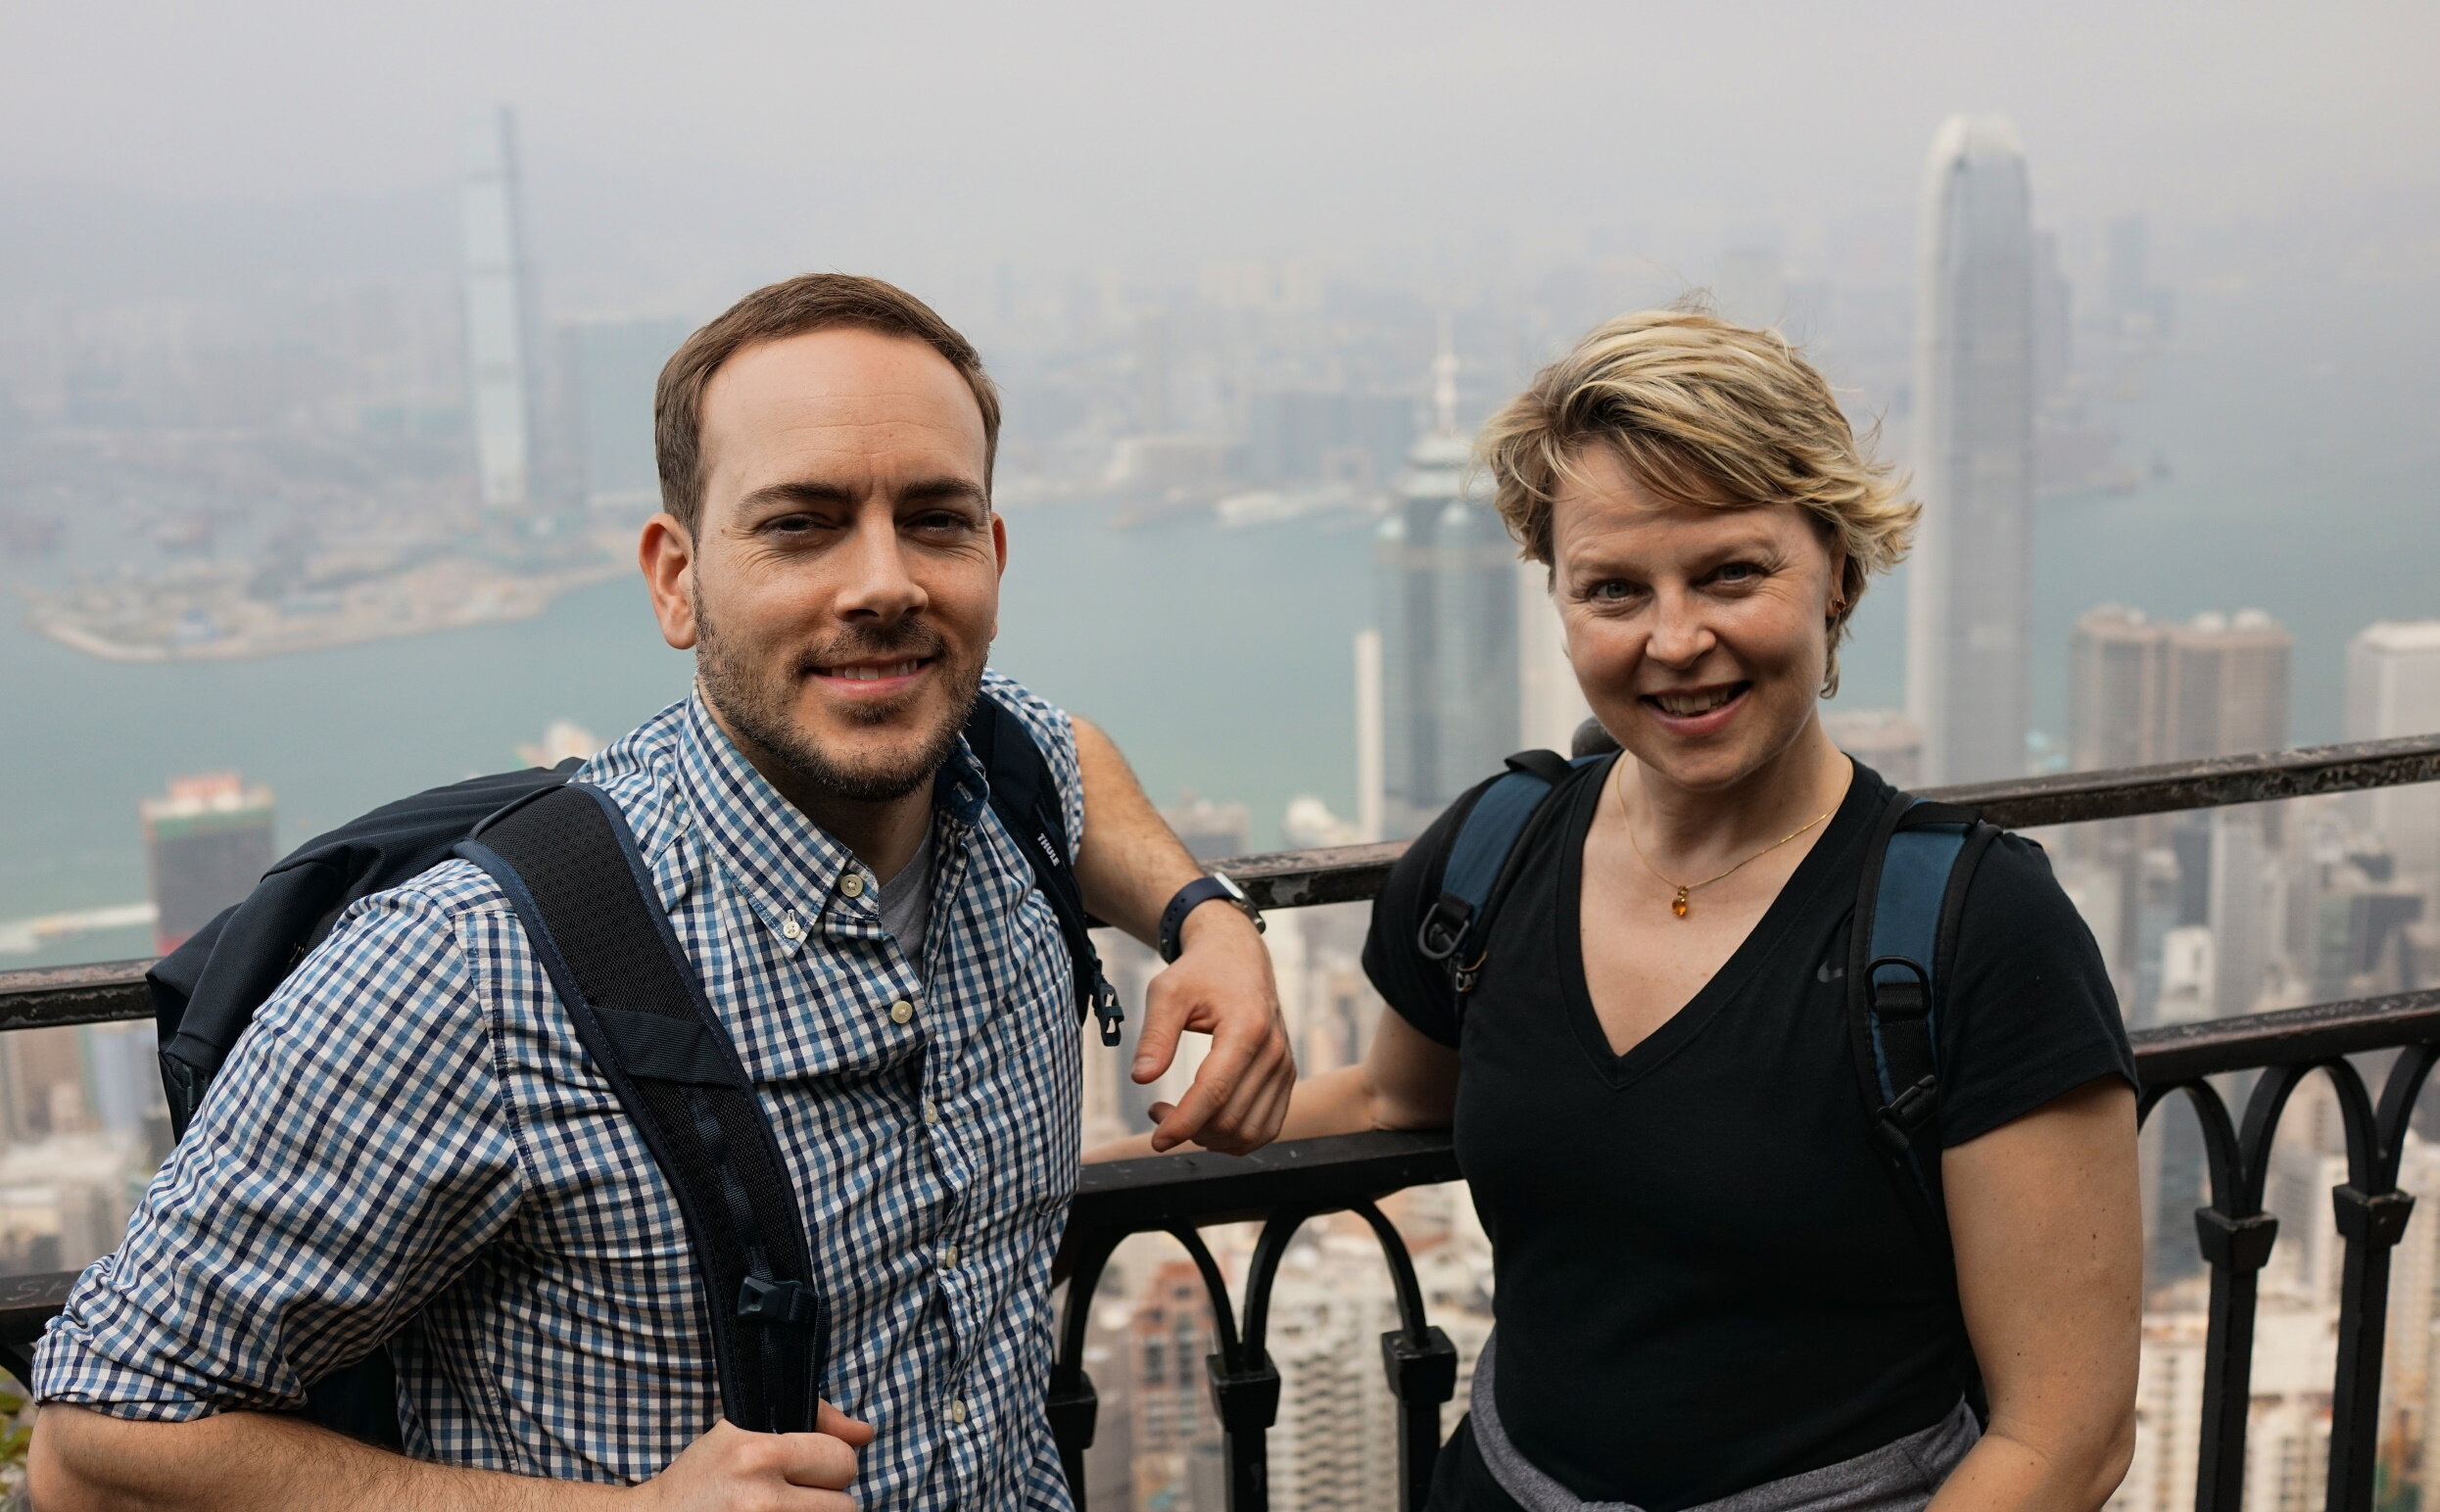 My Private Tour Guests at Victoria Peak, Hong Kong